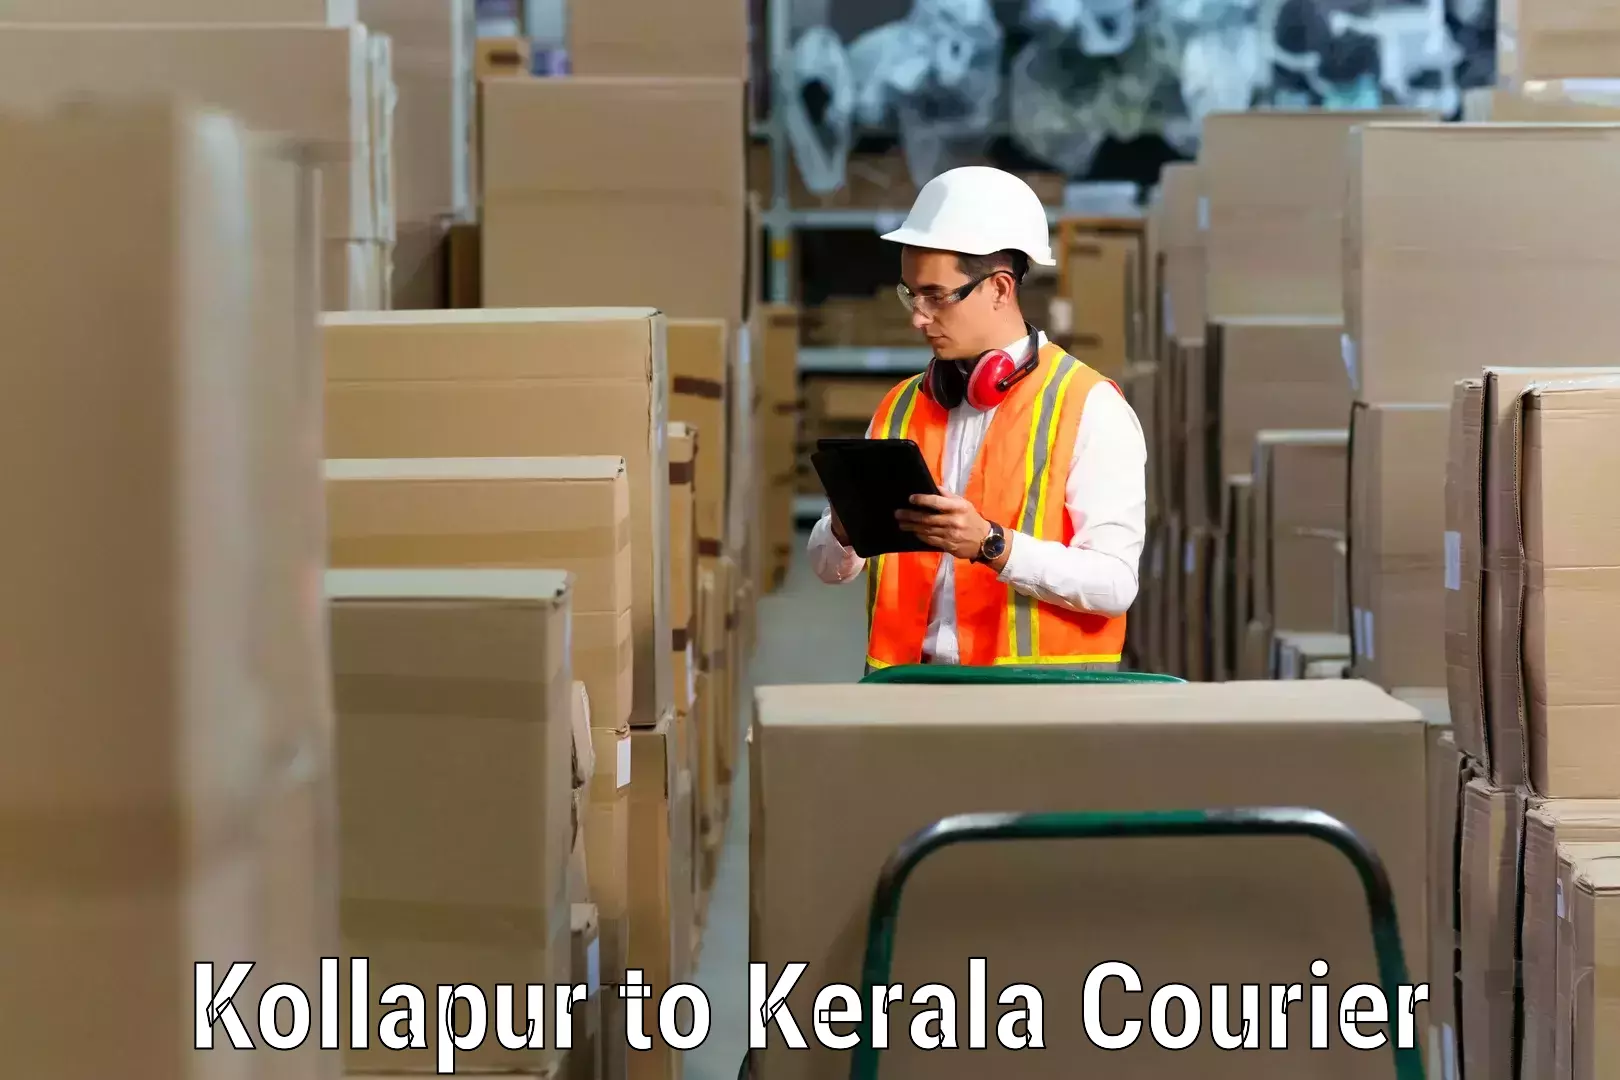 Moving and packing experts Kollapur to Kottayam